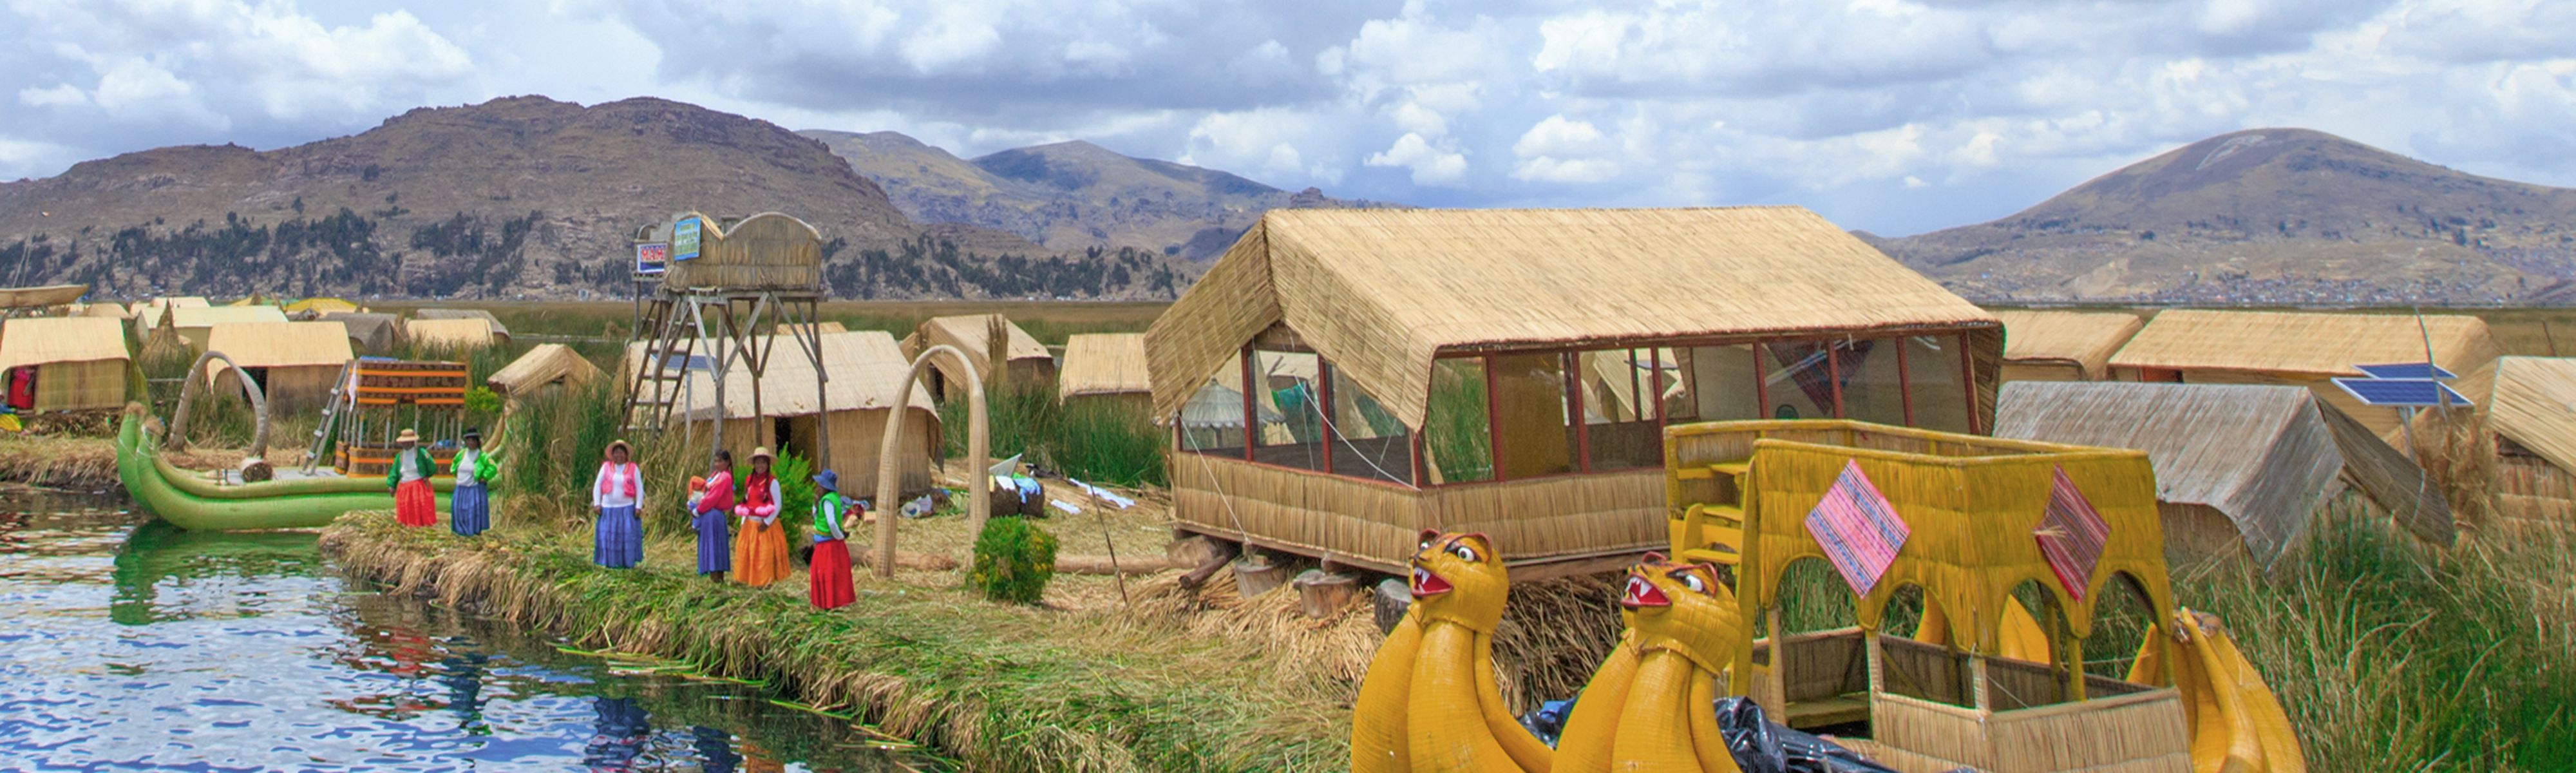 Peruvian people in bright colored skirts standing along lake Titicaca in Peru